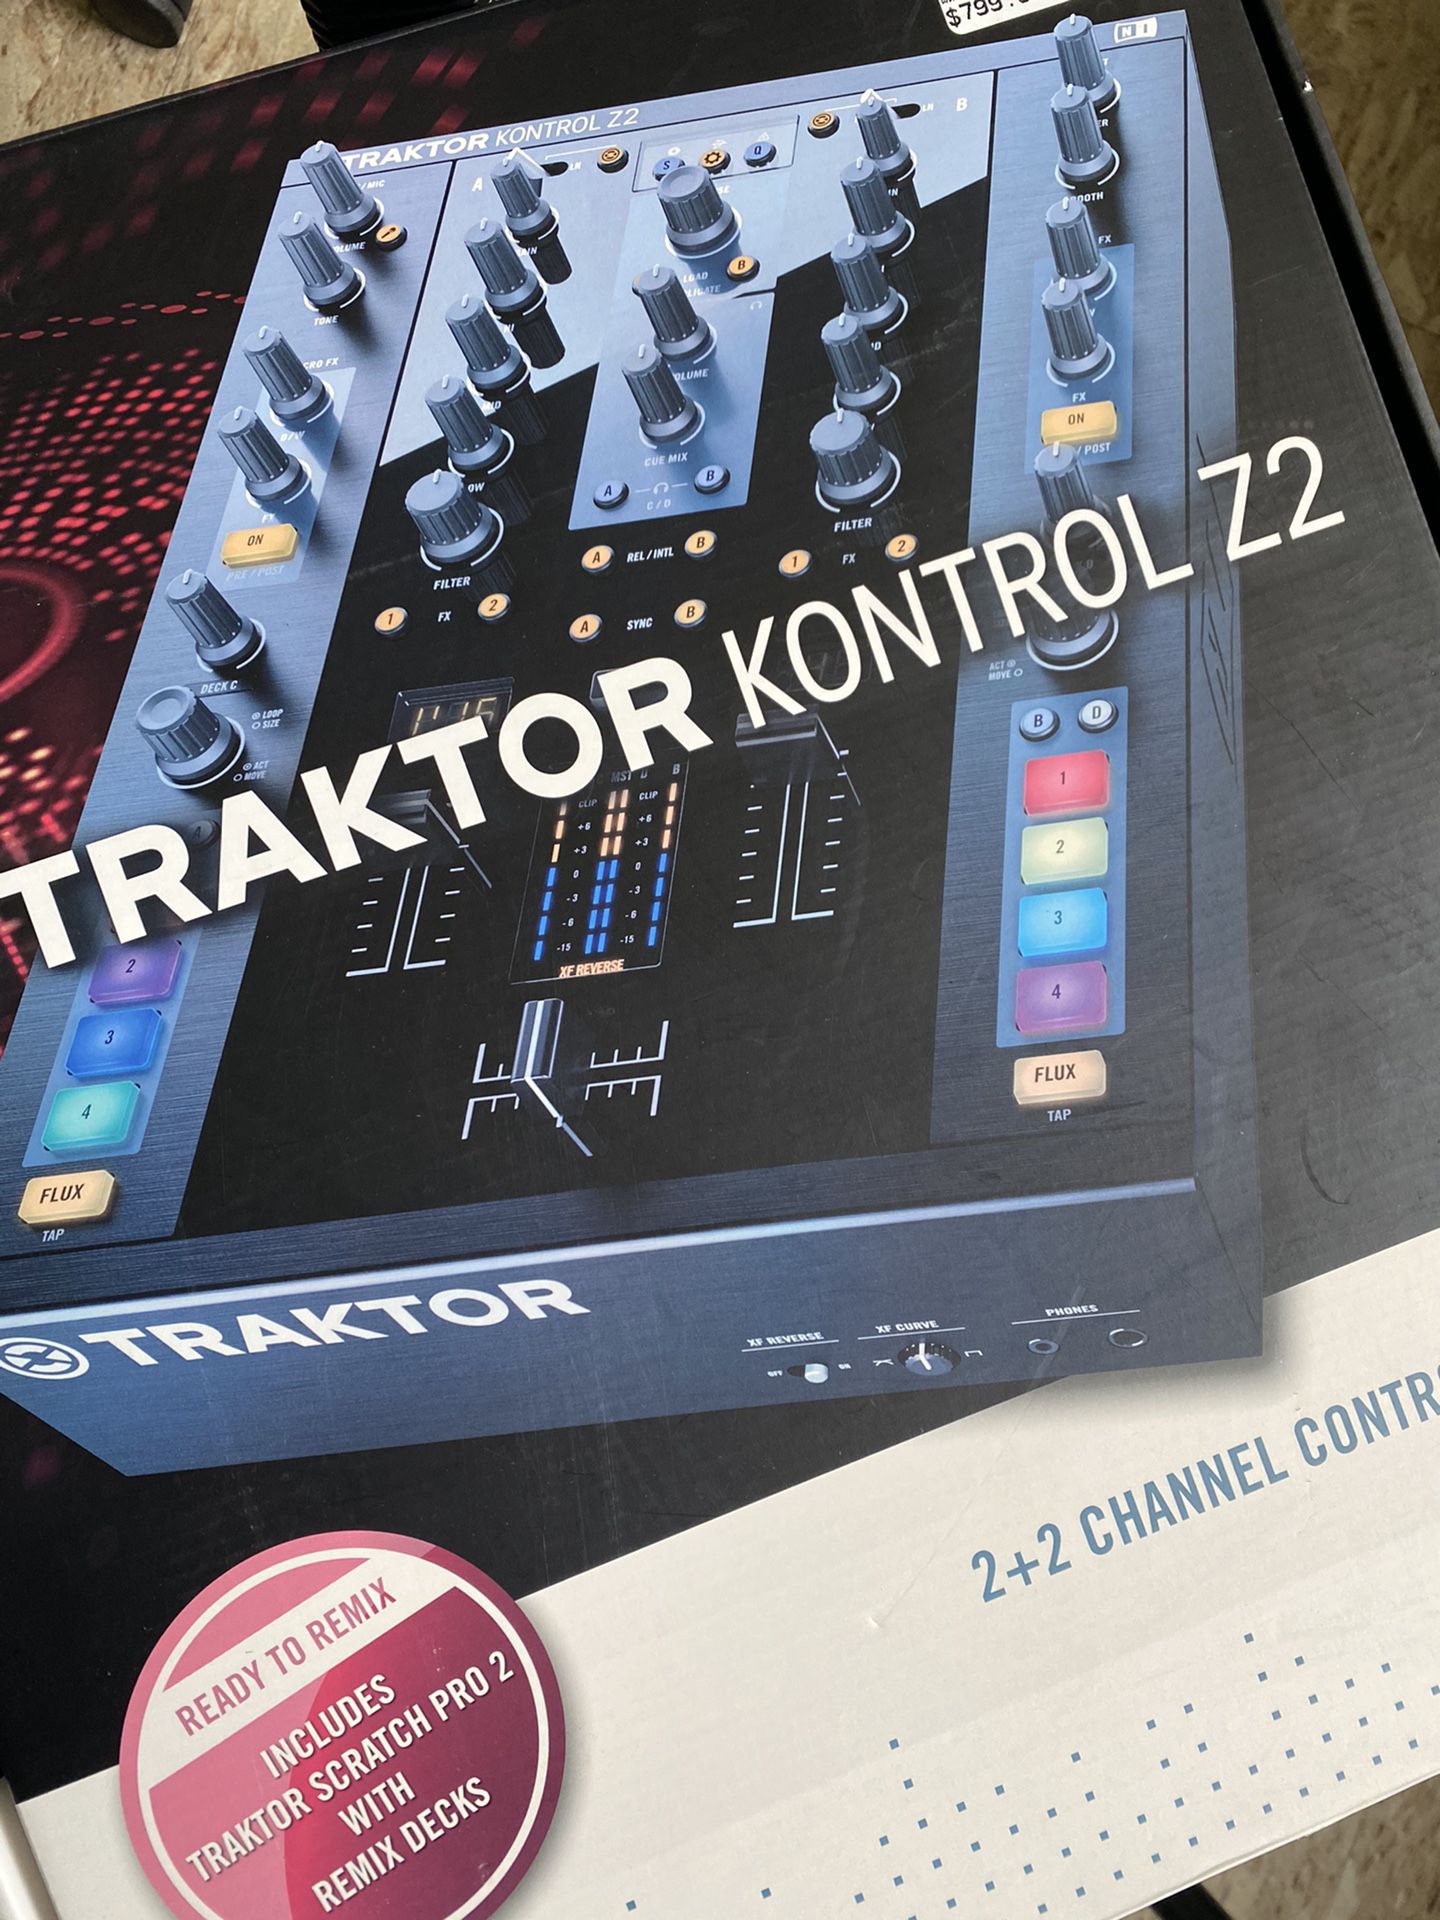 Native Instruments Traktor Kontrol Z2 DJ Mixer/Controller